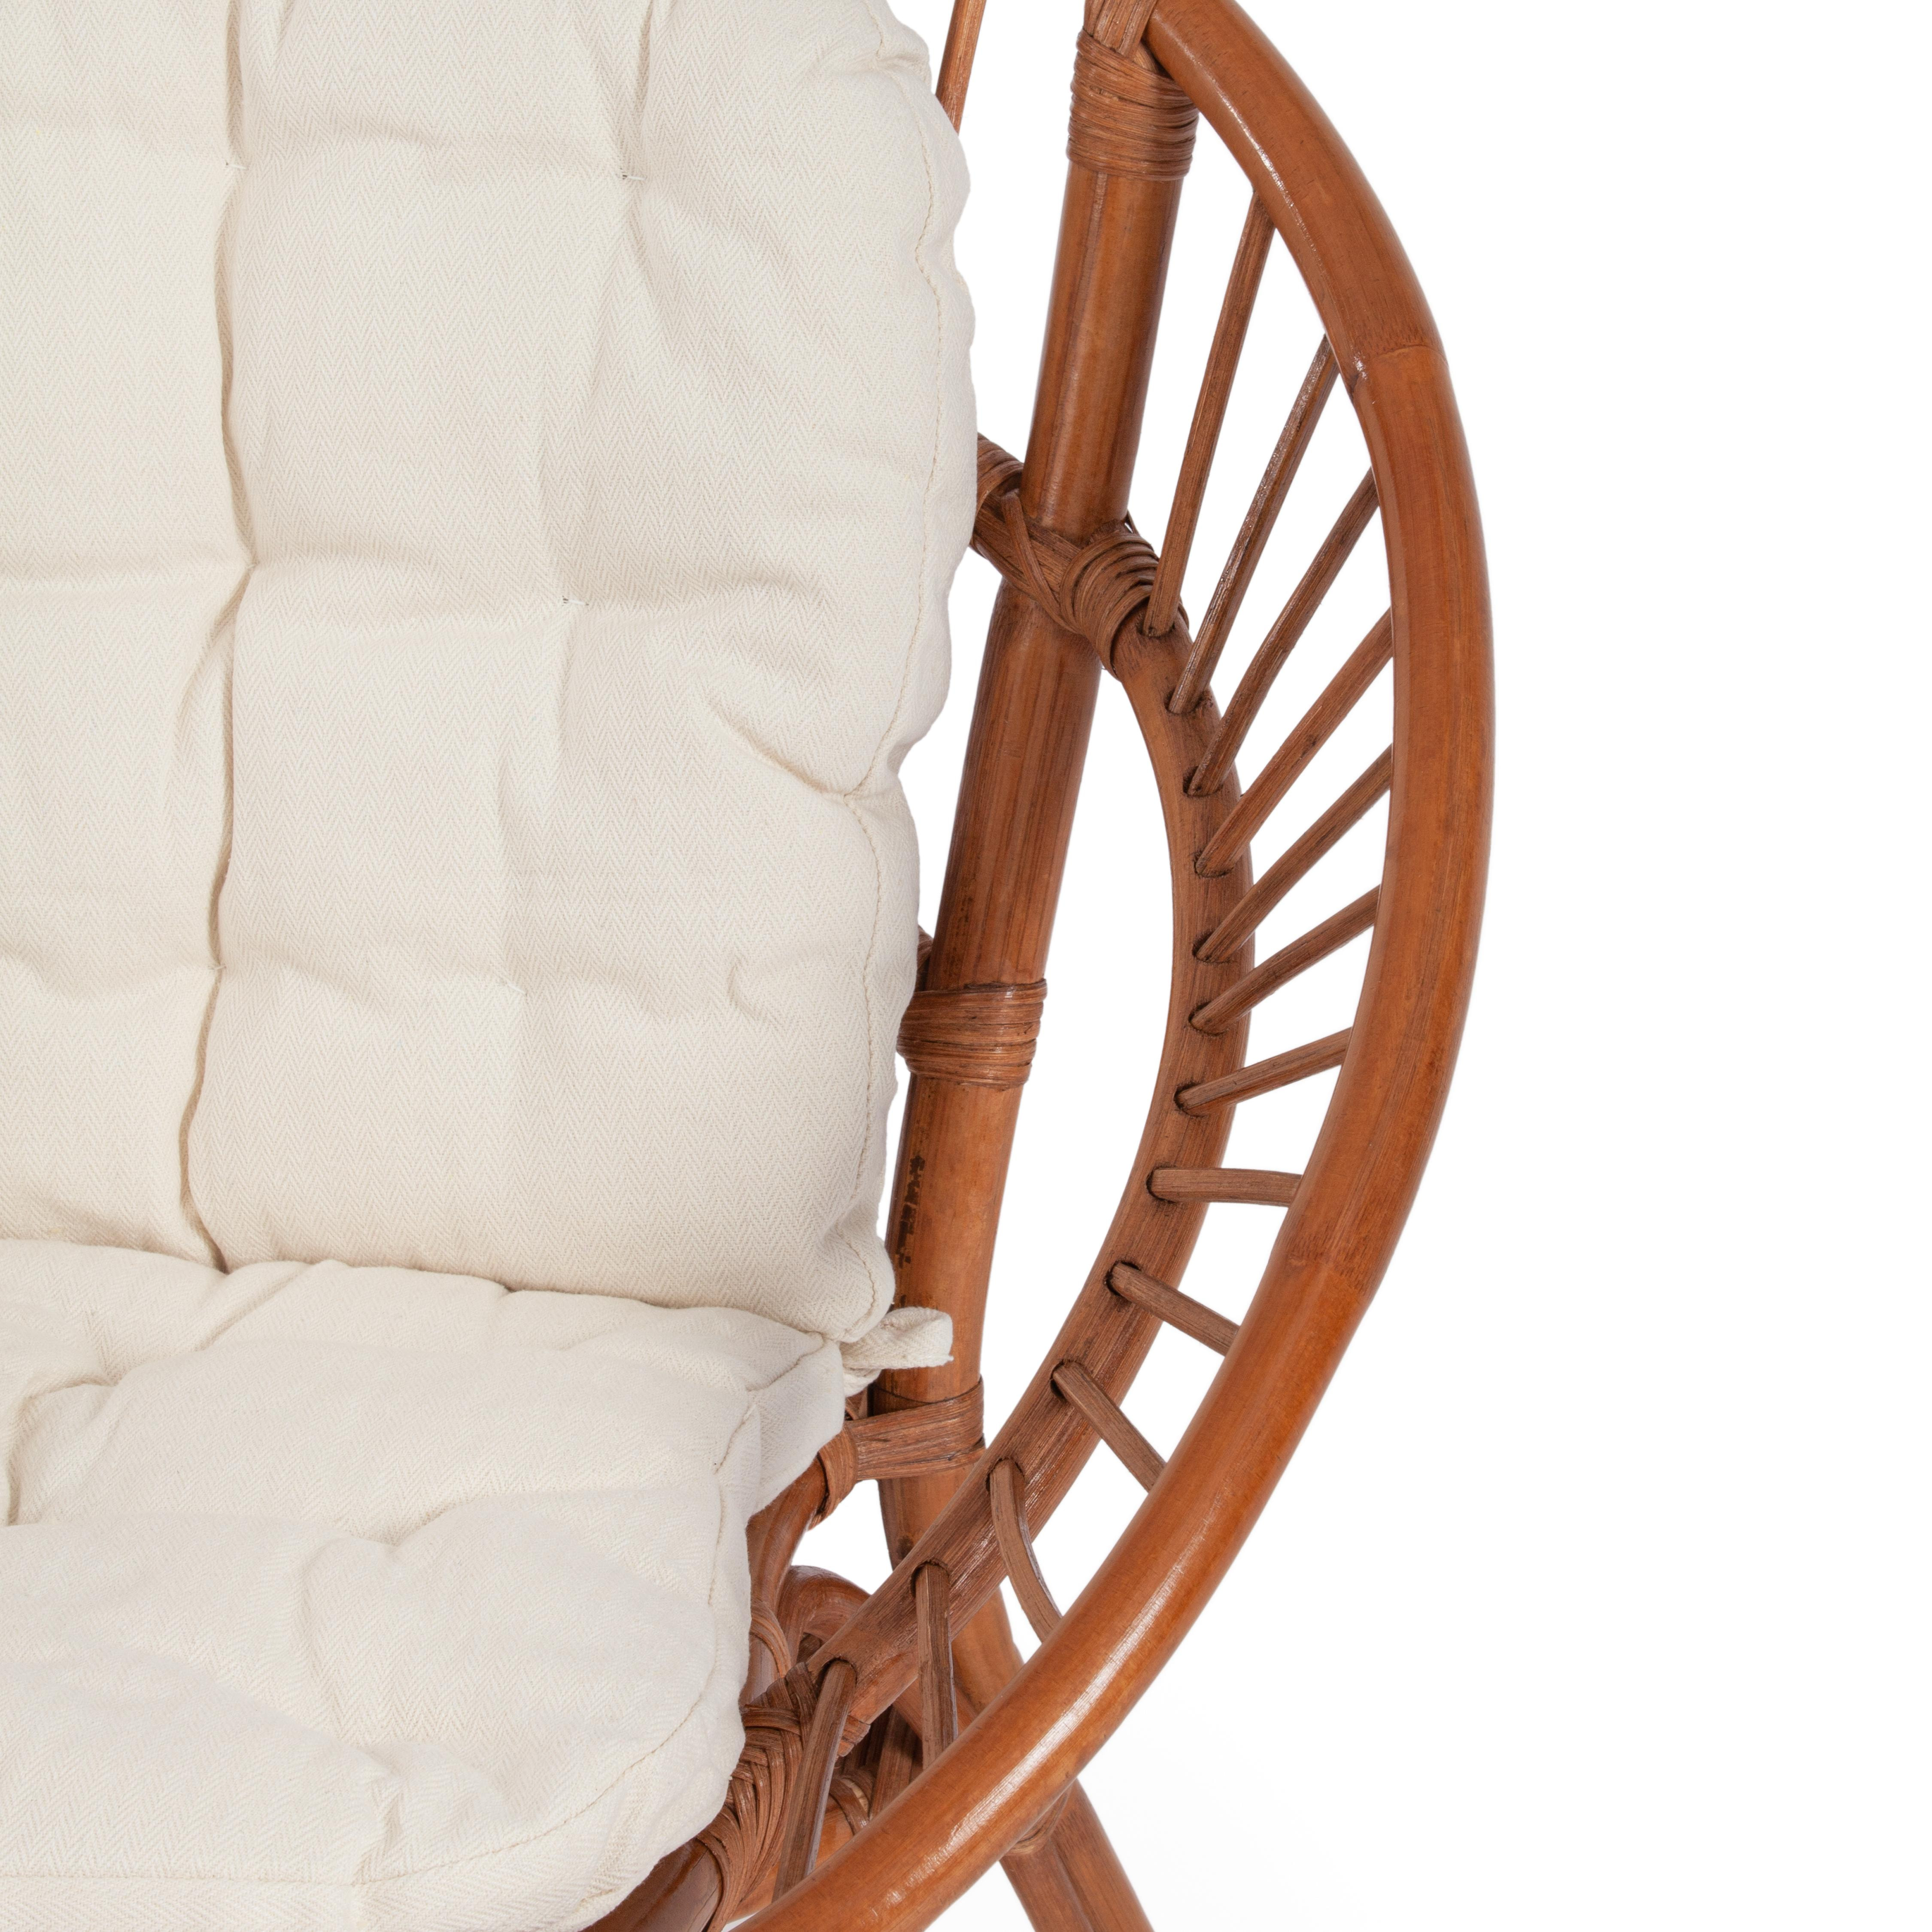 Комплект для отдыха TURKEY (стол круглый (со стеклом)+2 кресла + диван) /с подушками/ ротанг, кр:70х65х78см, дв:120х65х78см, ст:D50х56,5см, coco brown (коричневый кокос)